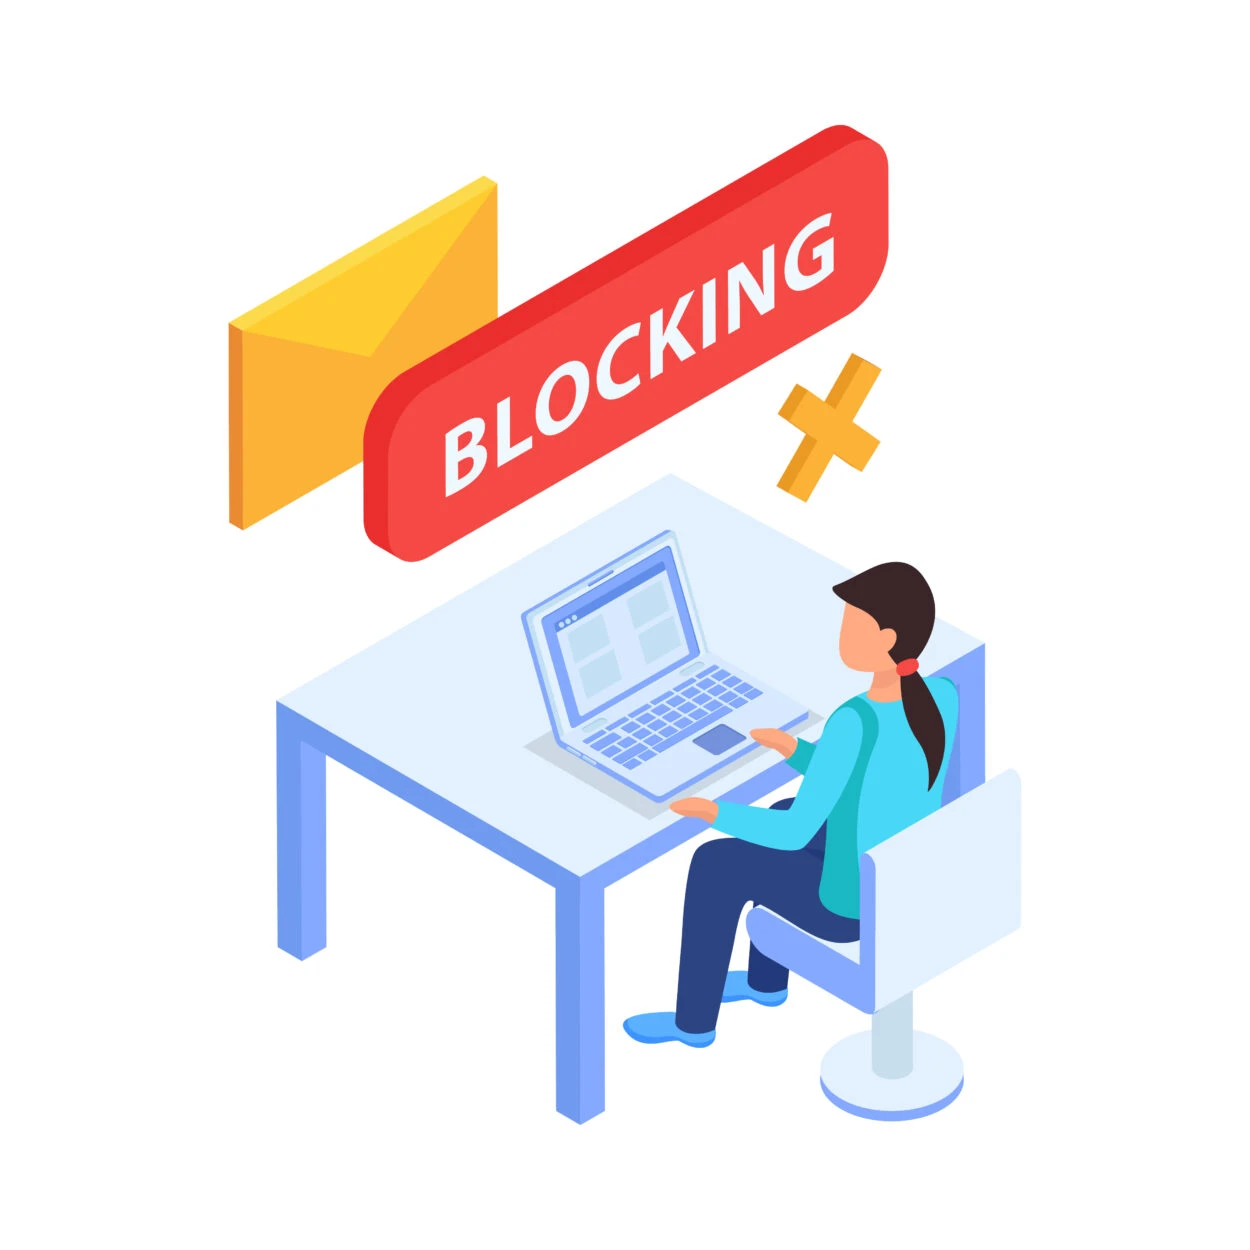 Illustration of blocking